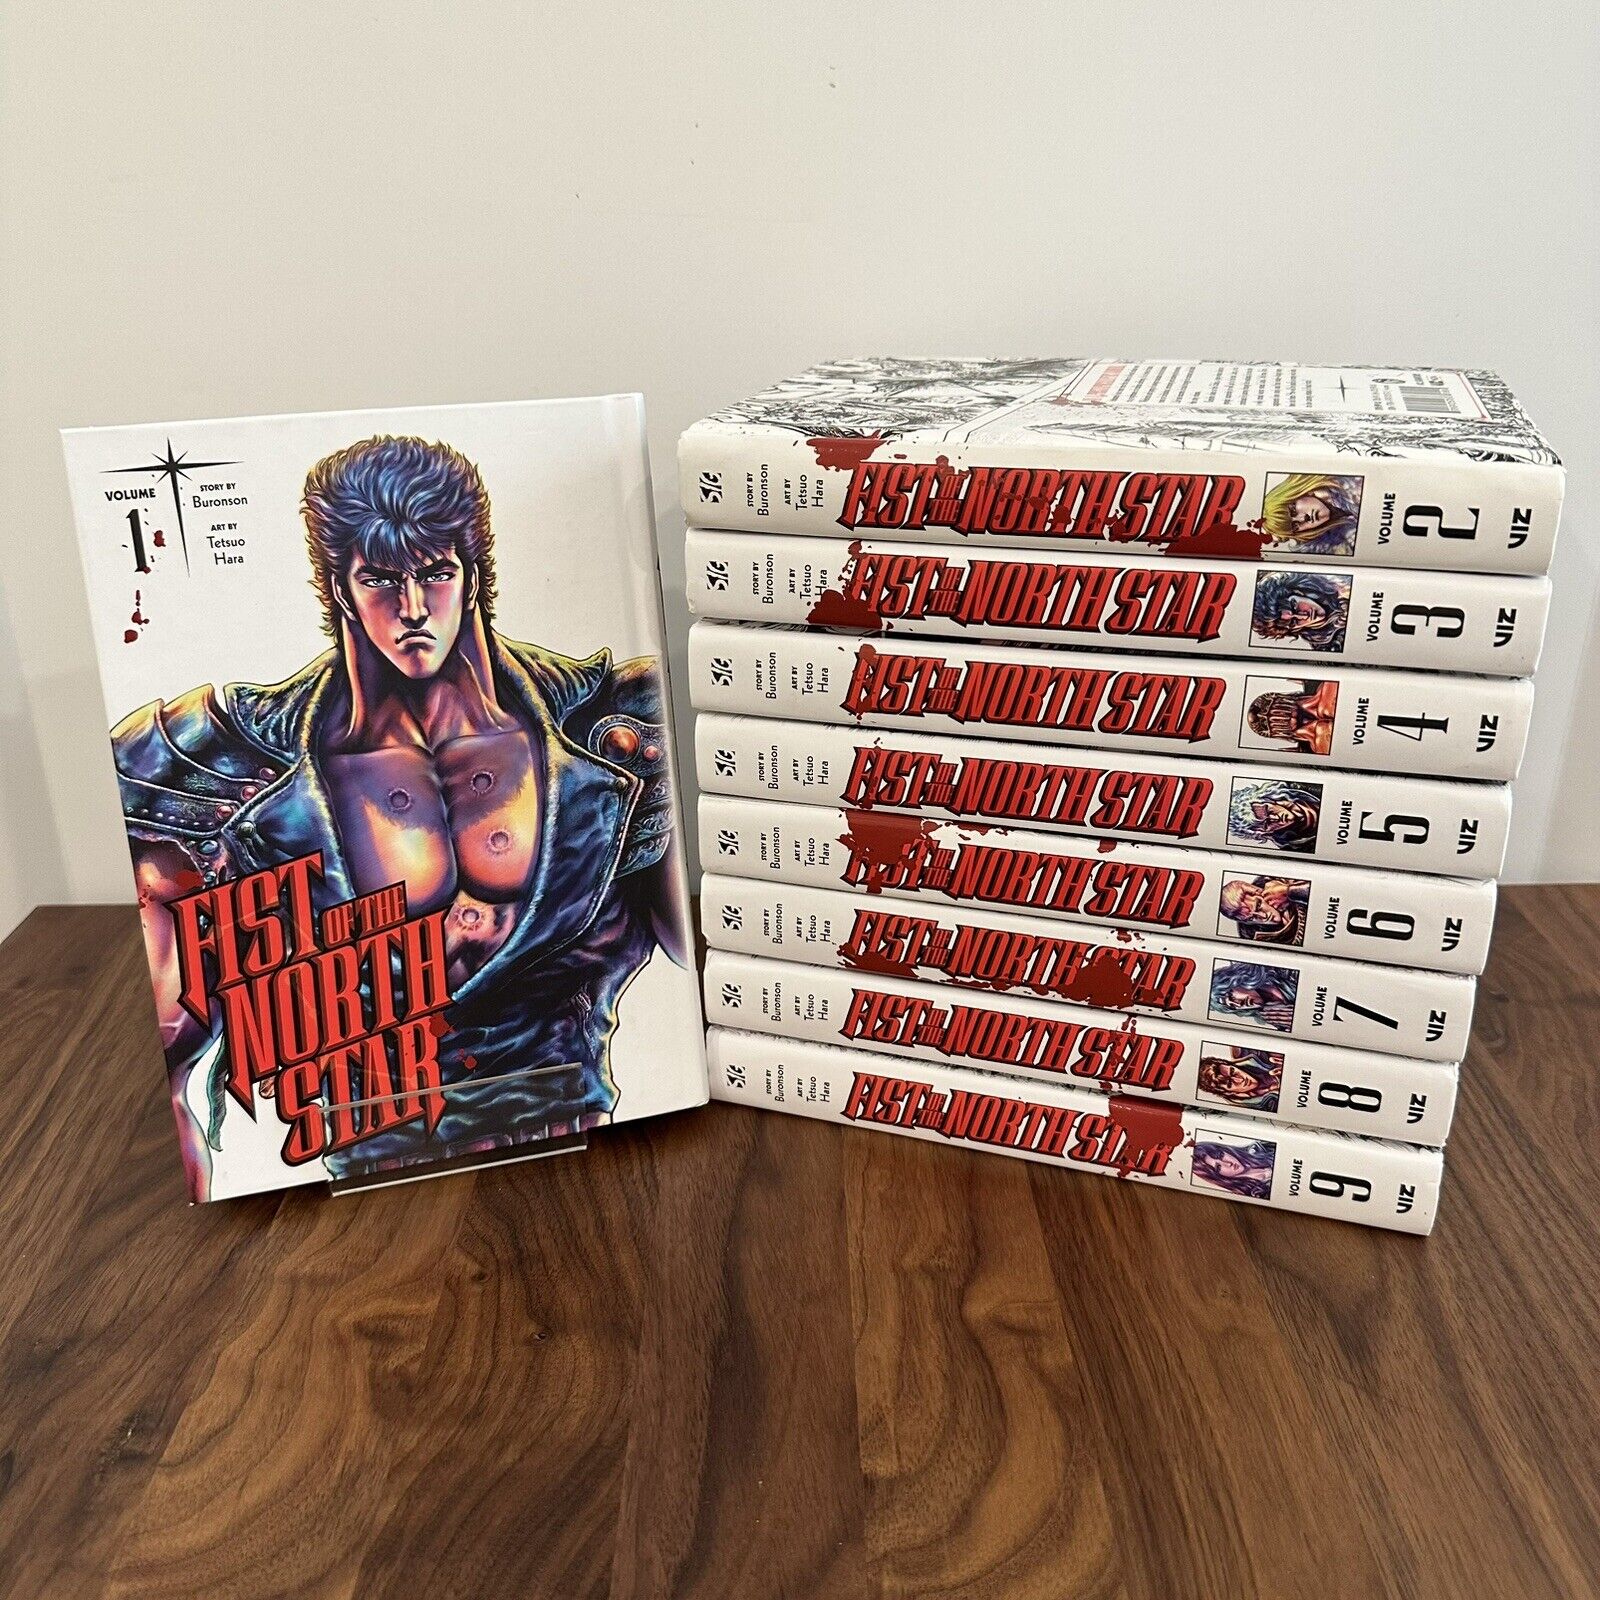 Fist of the North Star Manga Vol 1-9 Hardcover by Buronson & Tetsuo Hara English